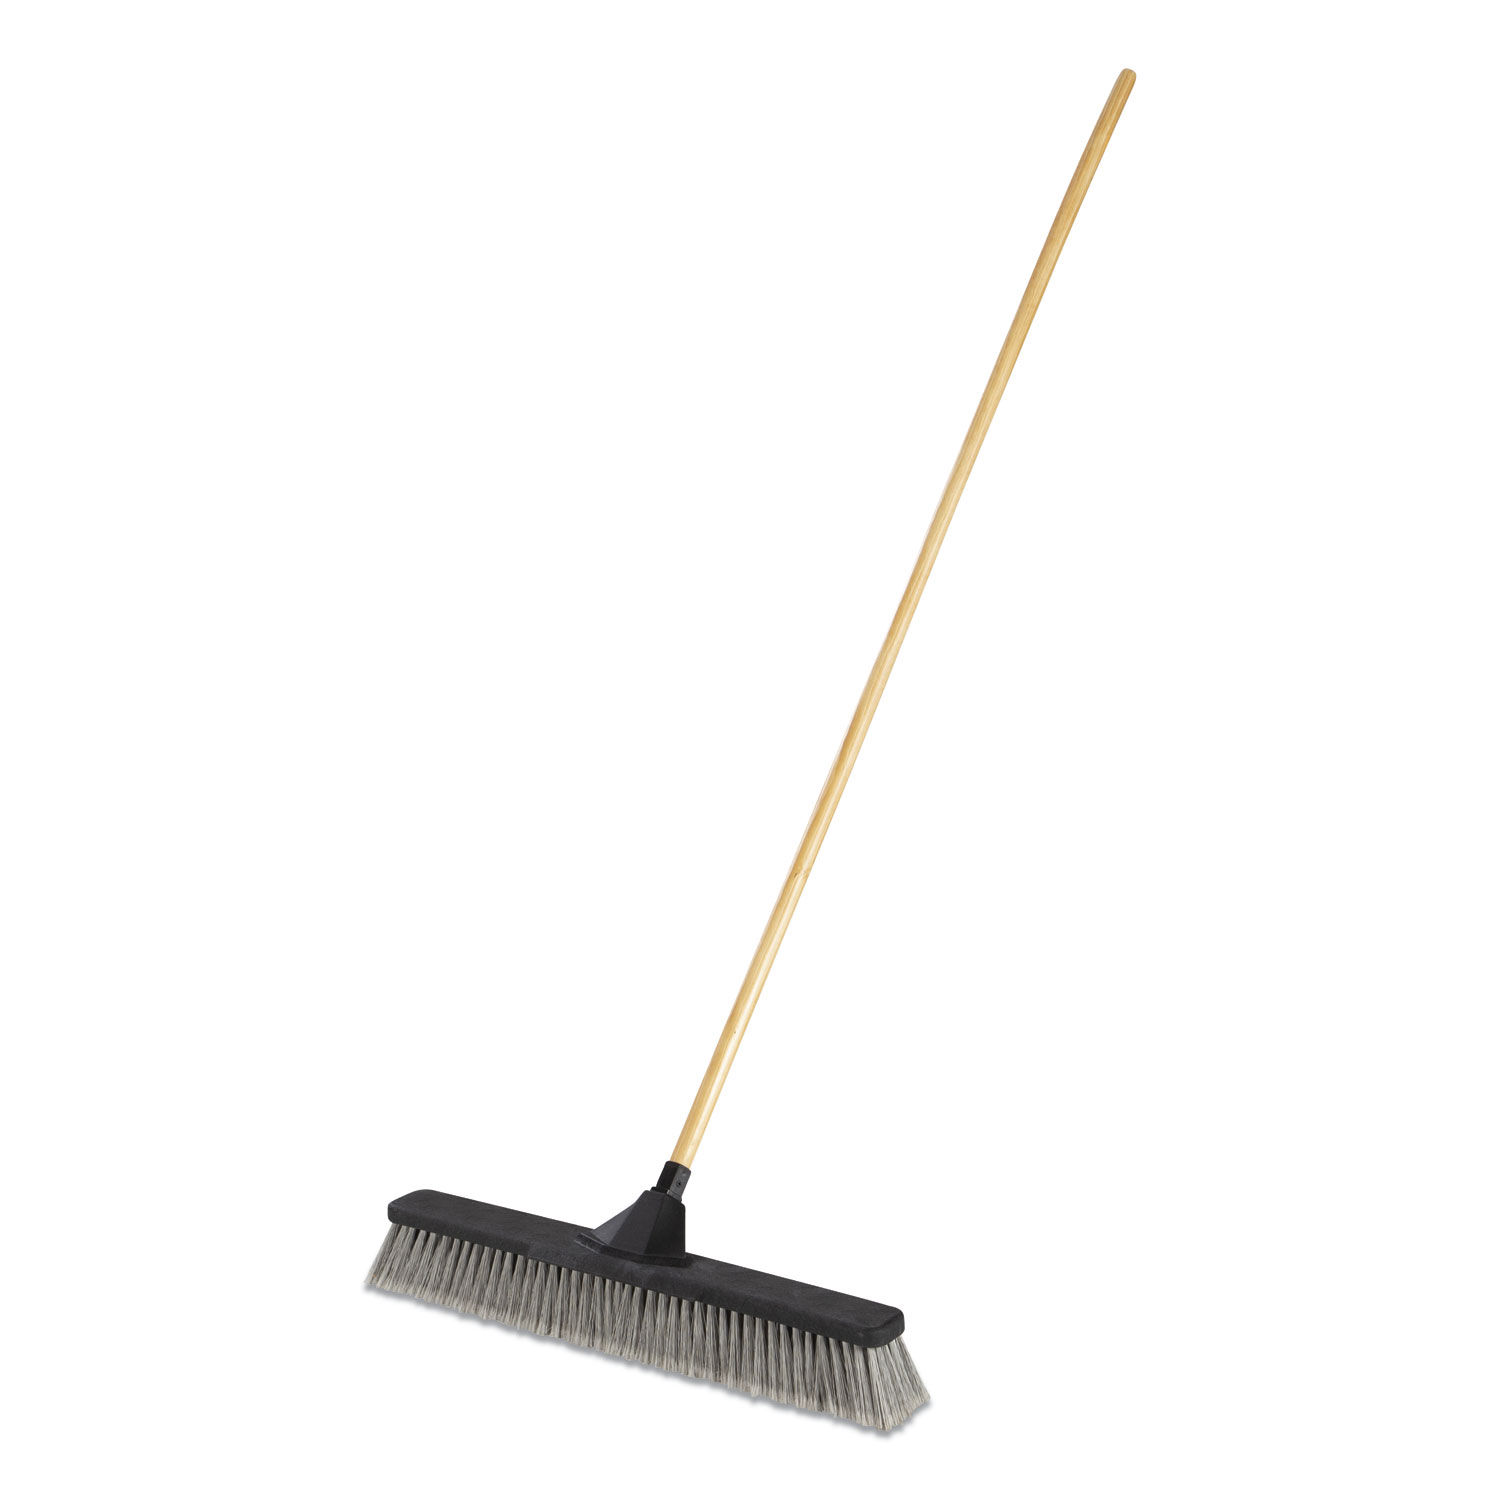 Rubbermaid Maximizer Push-to-Center Broom 36 Black/Yellow